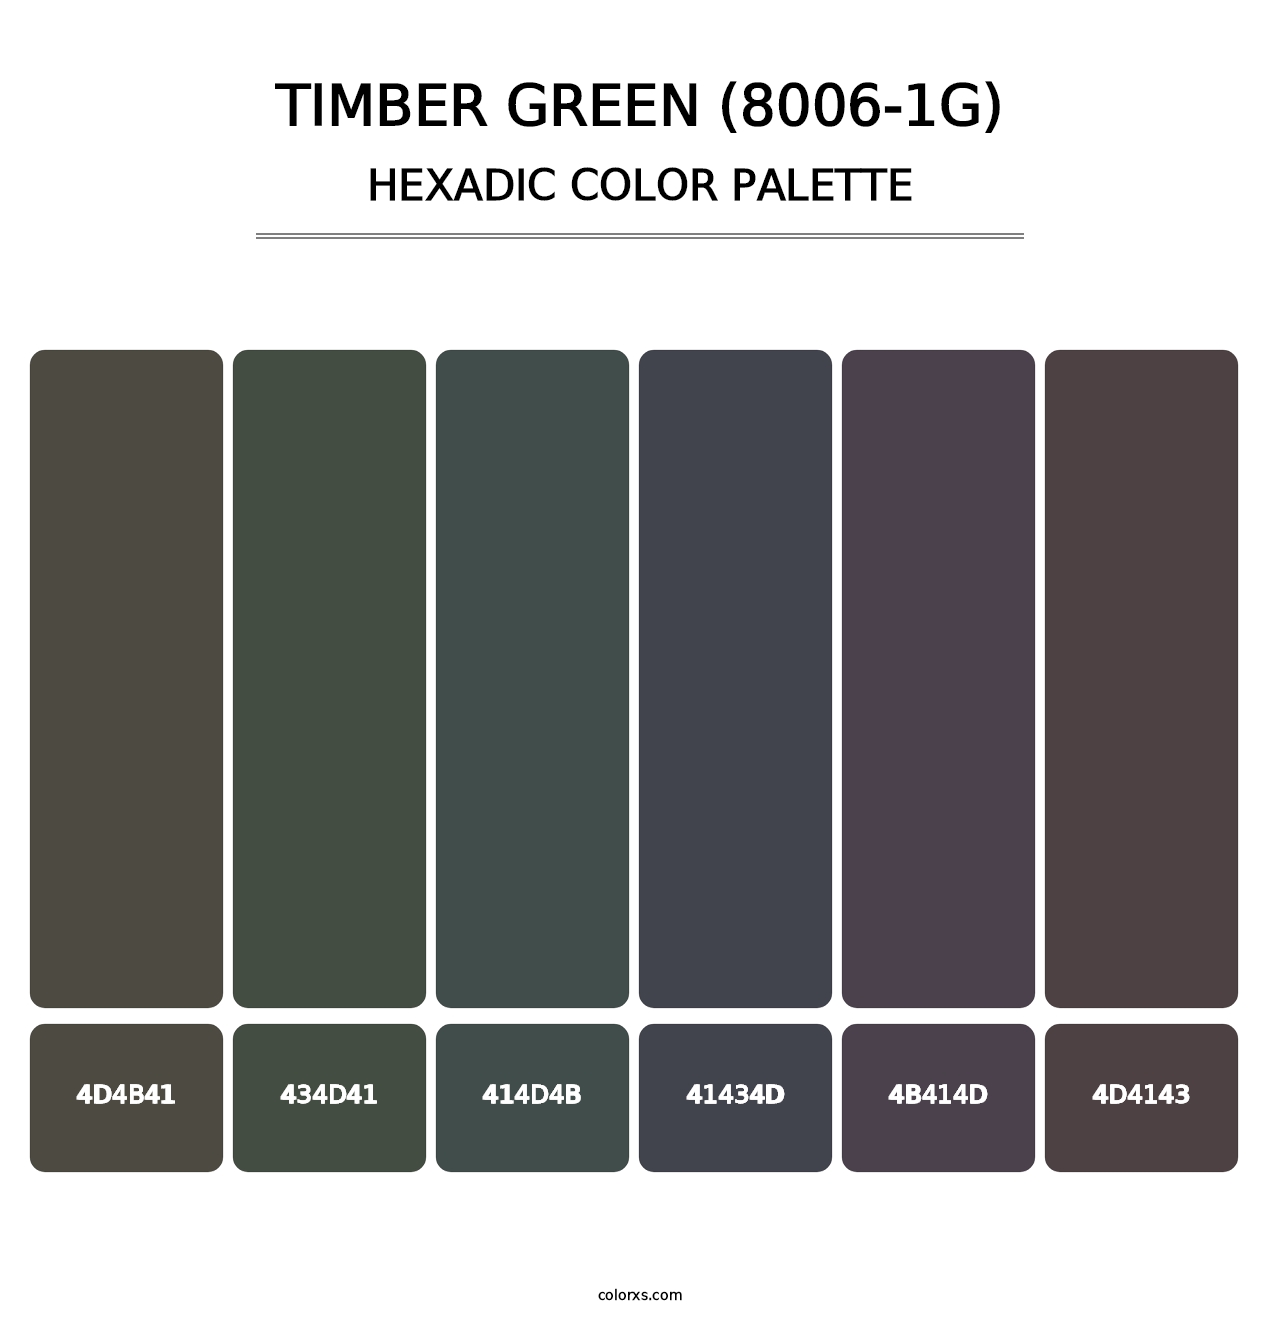 Timber Green (8006-1G) - Hexadic Color Palette